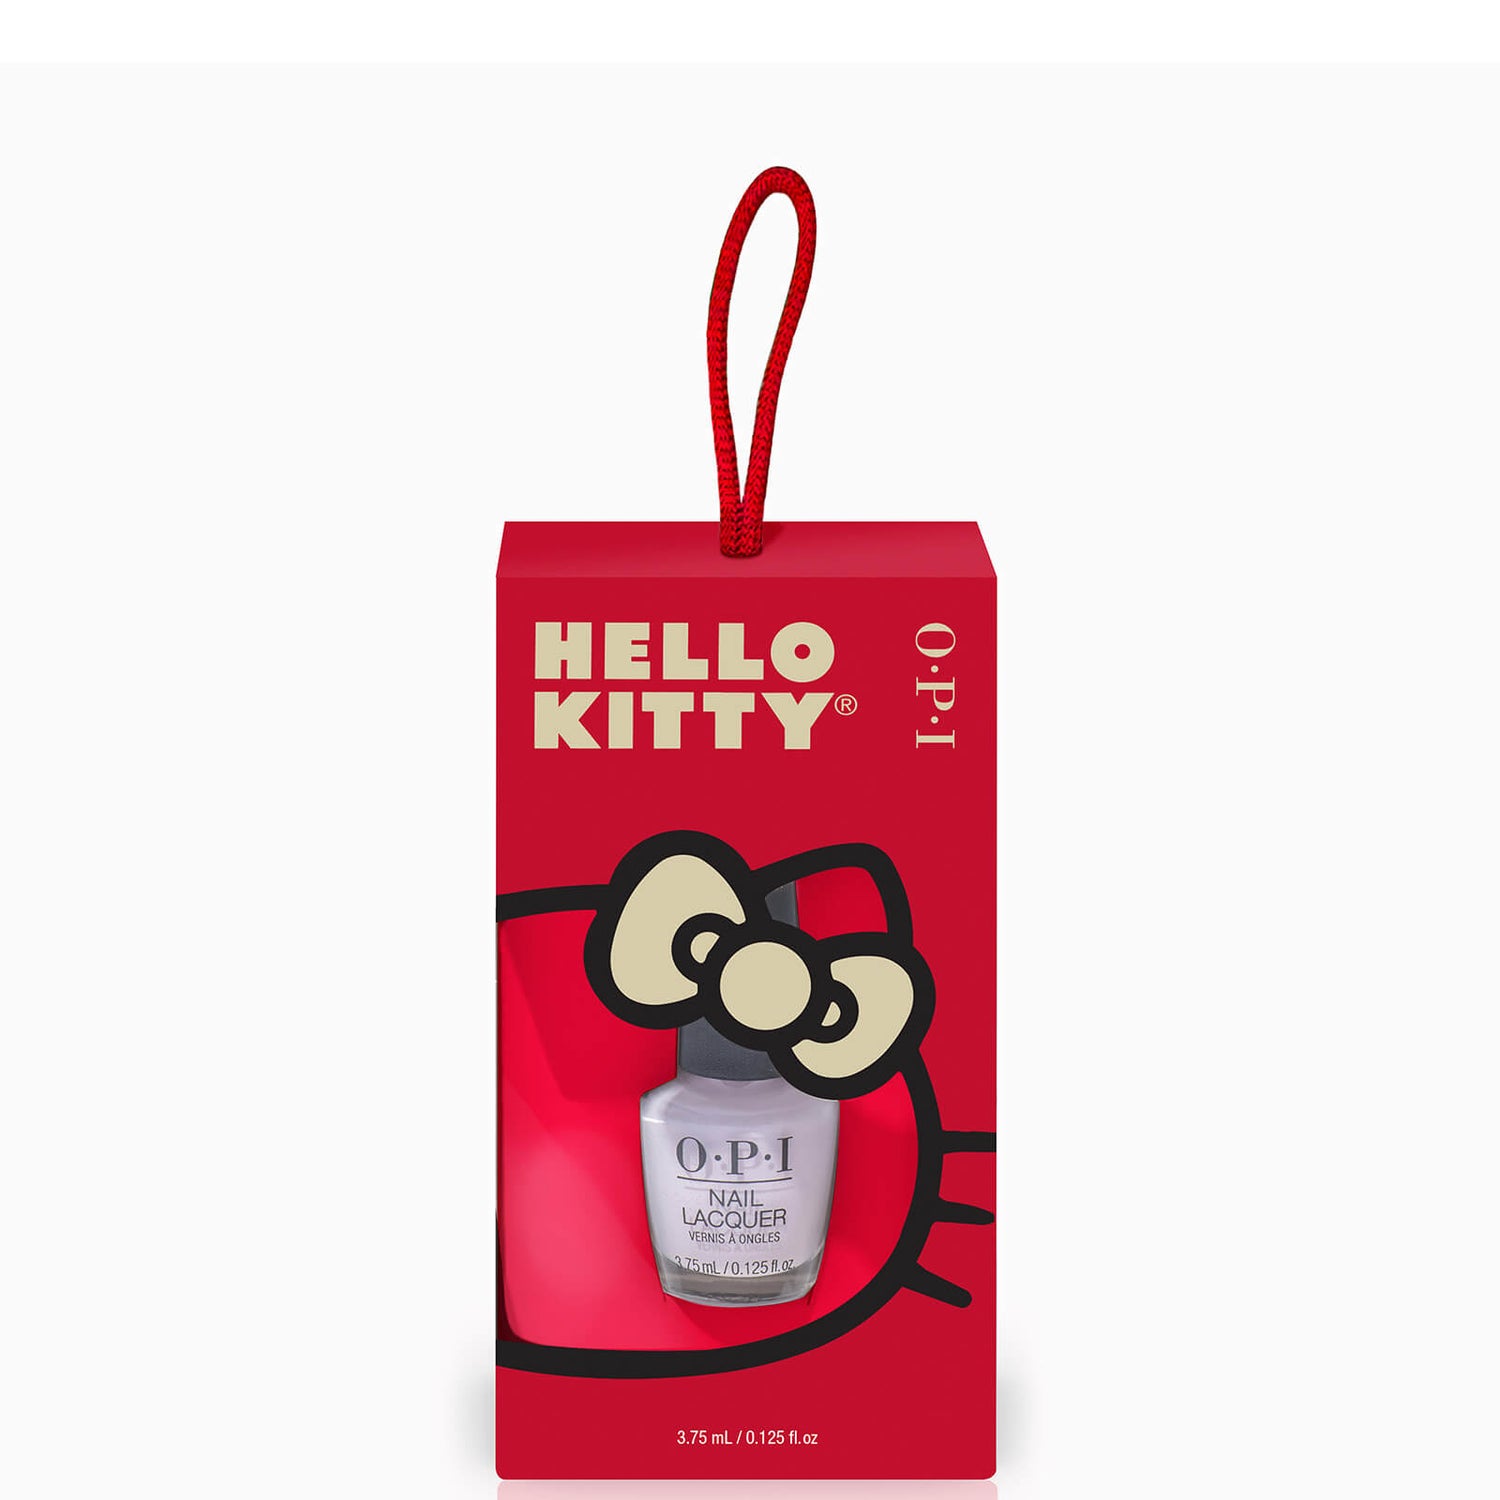 OPI Hello Kitty Limited Edition Nail Polish Ornament 3.75ml